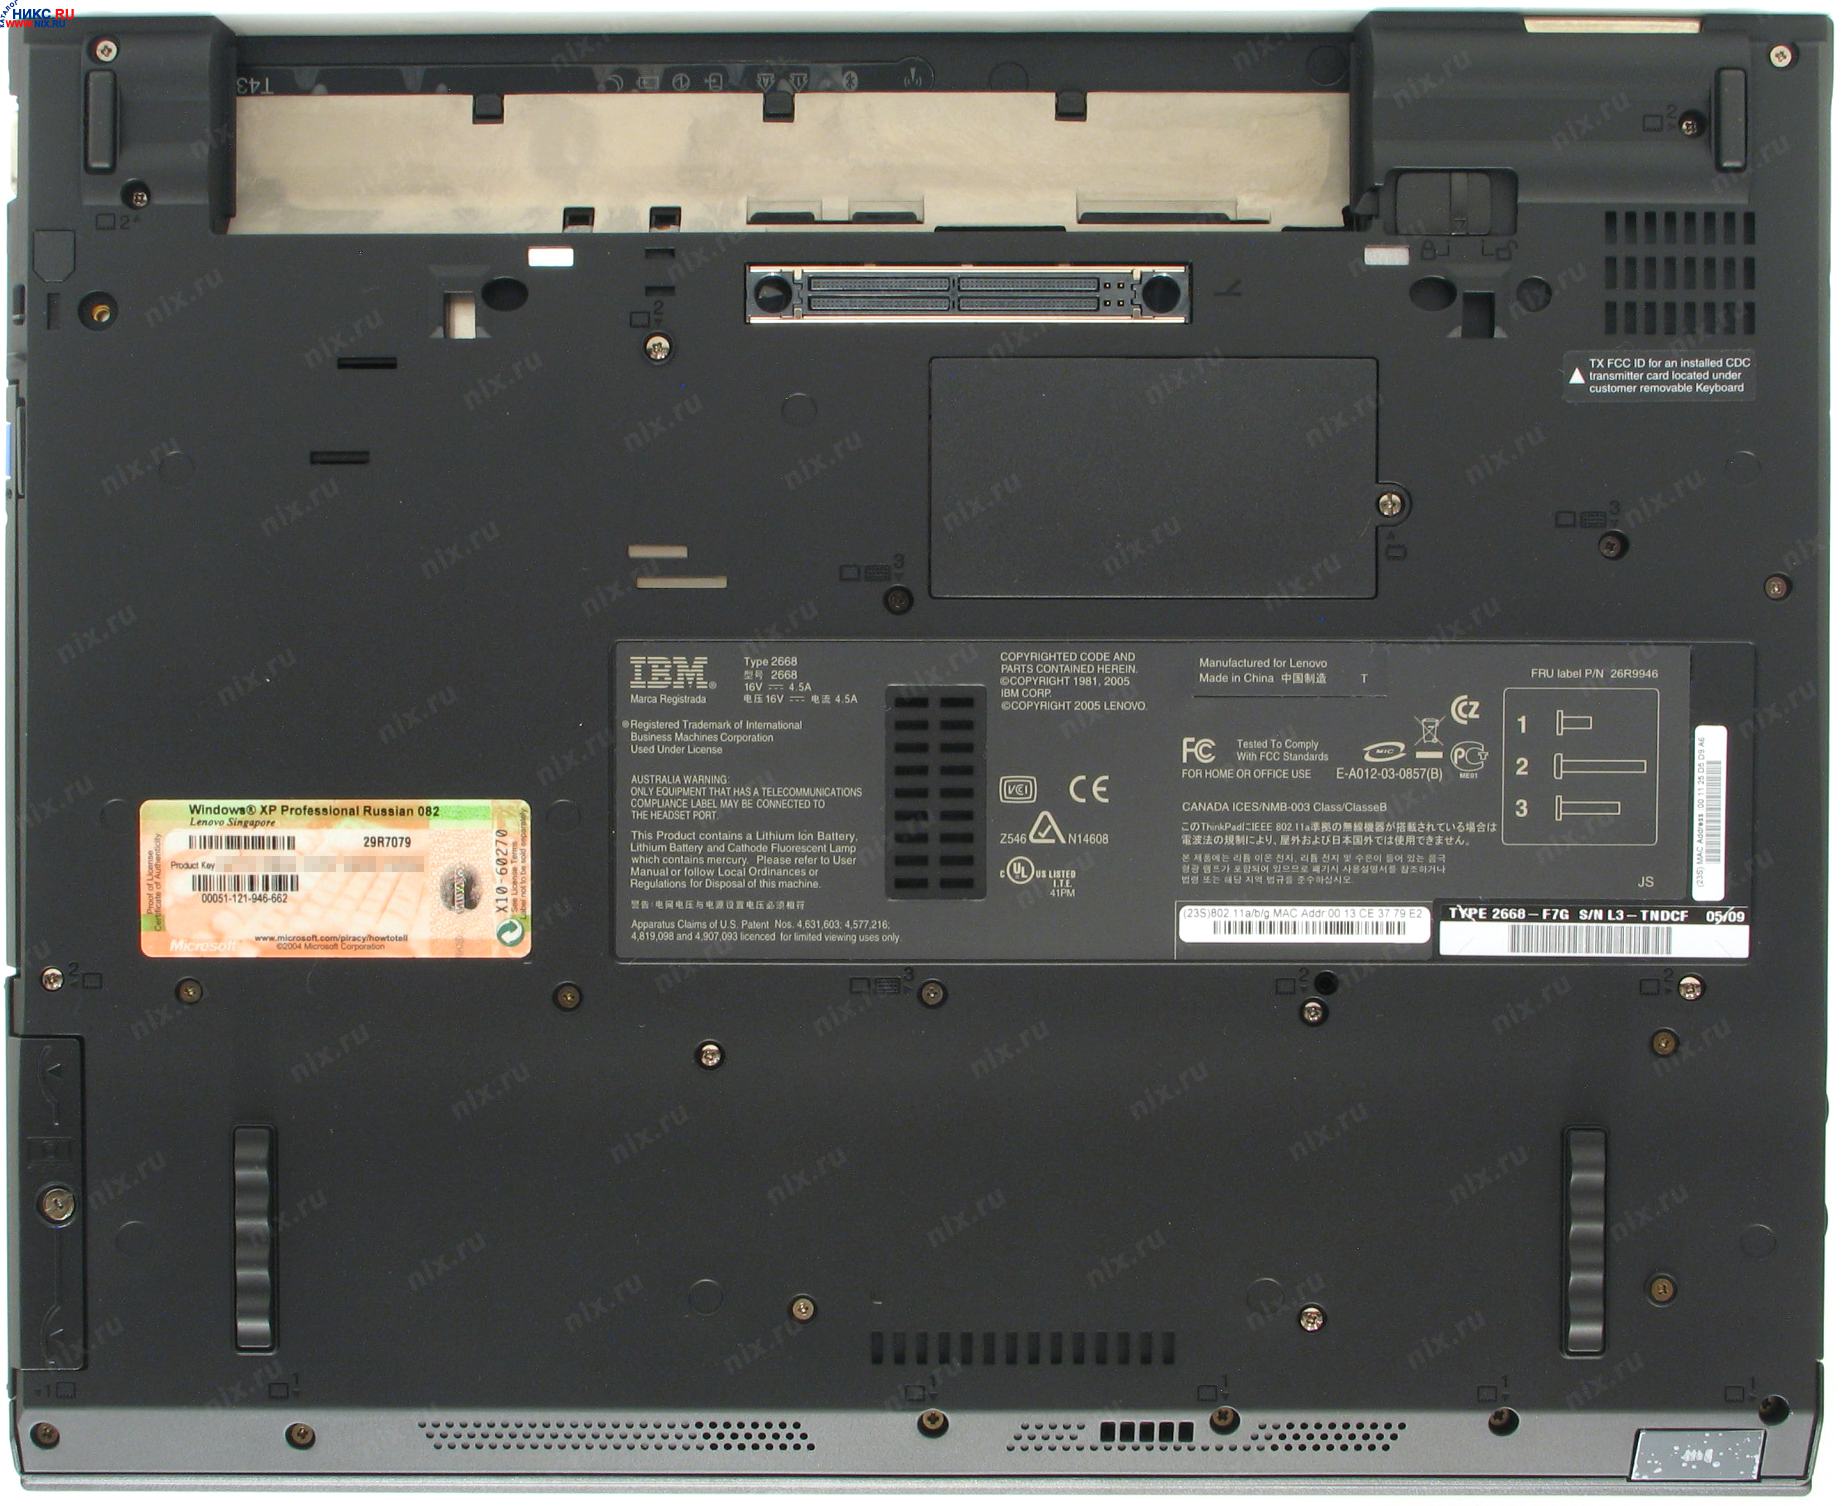 Ноутбук Ibm Thinkpad T43 2668-44g